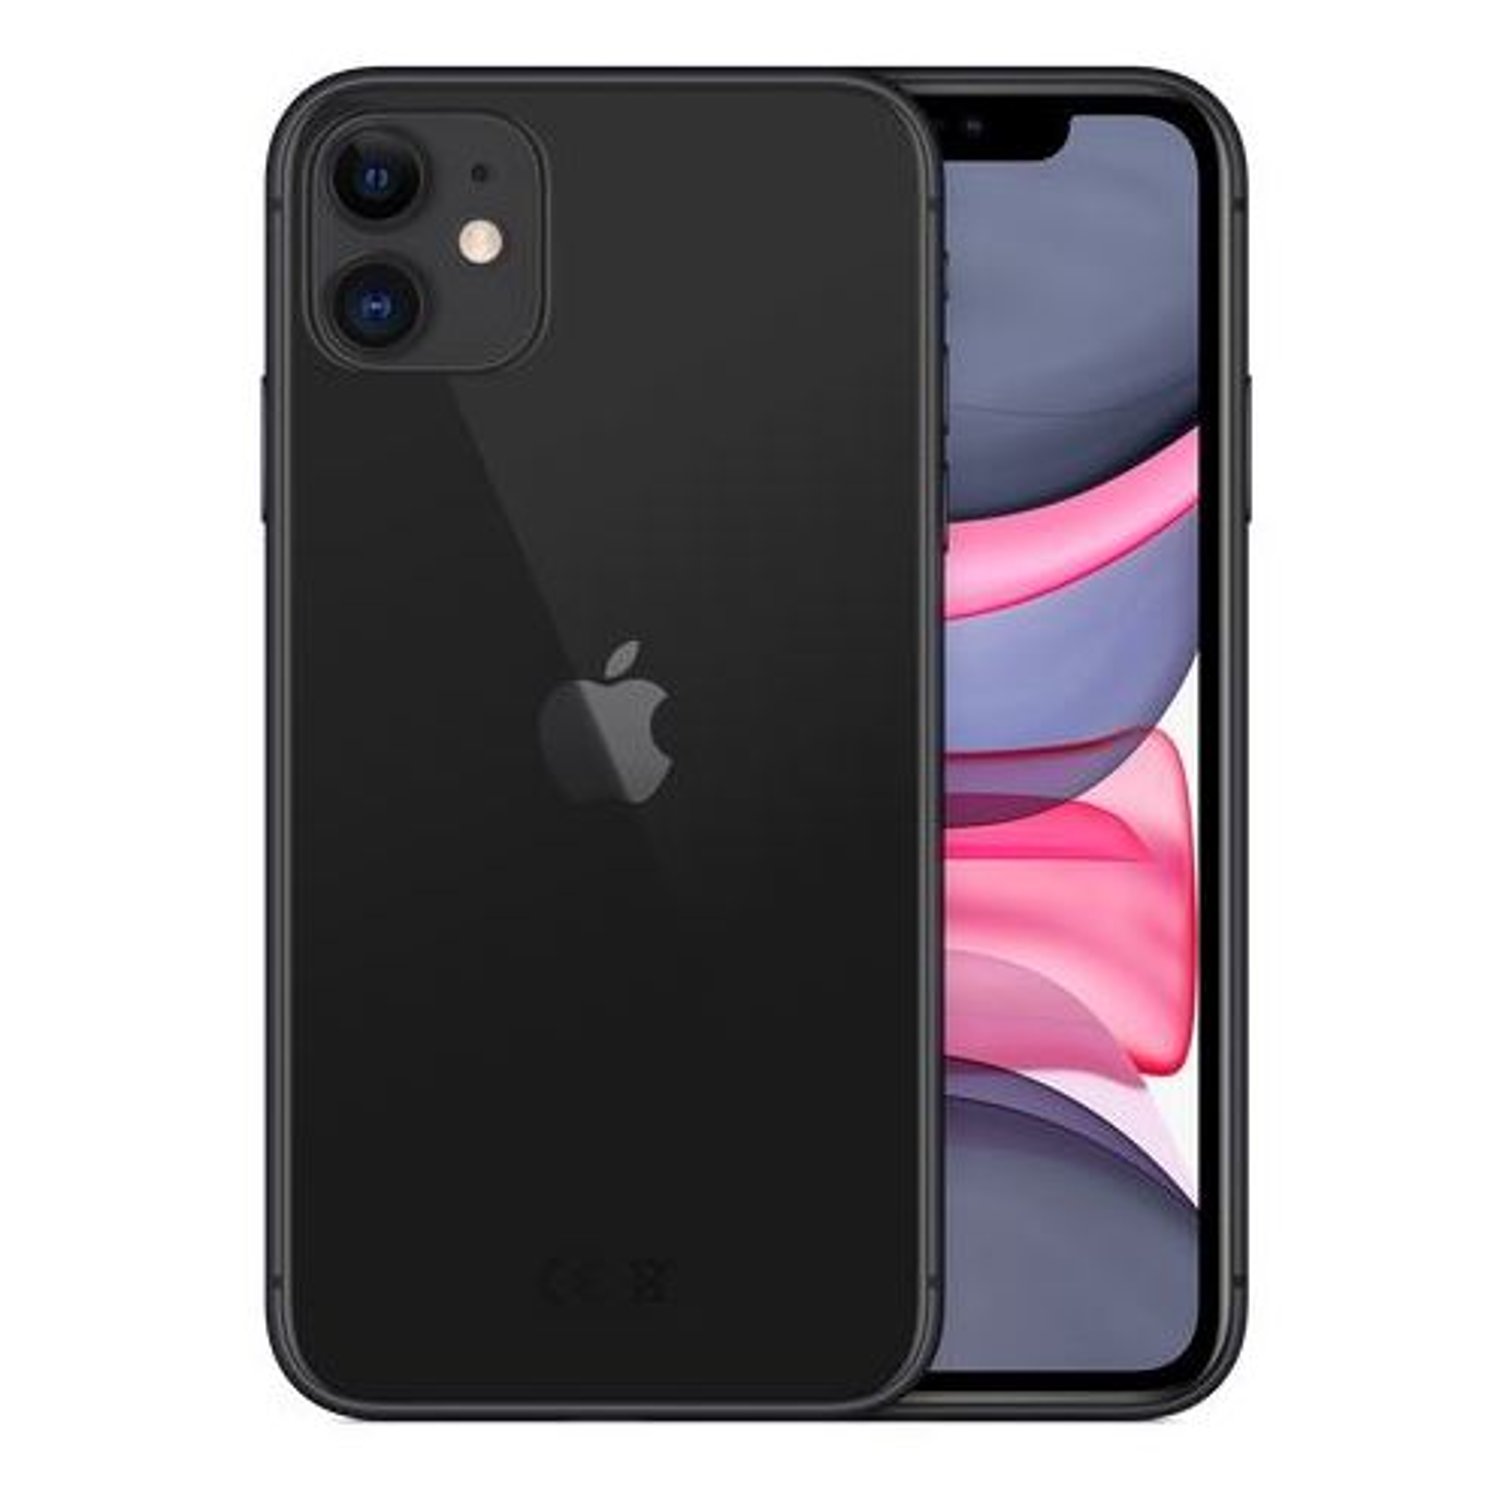 Apple iPhone 11 (128GB) – Black